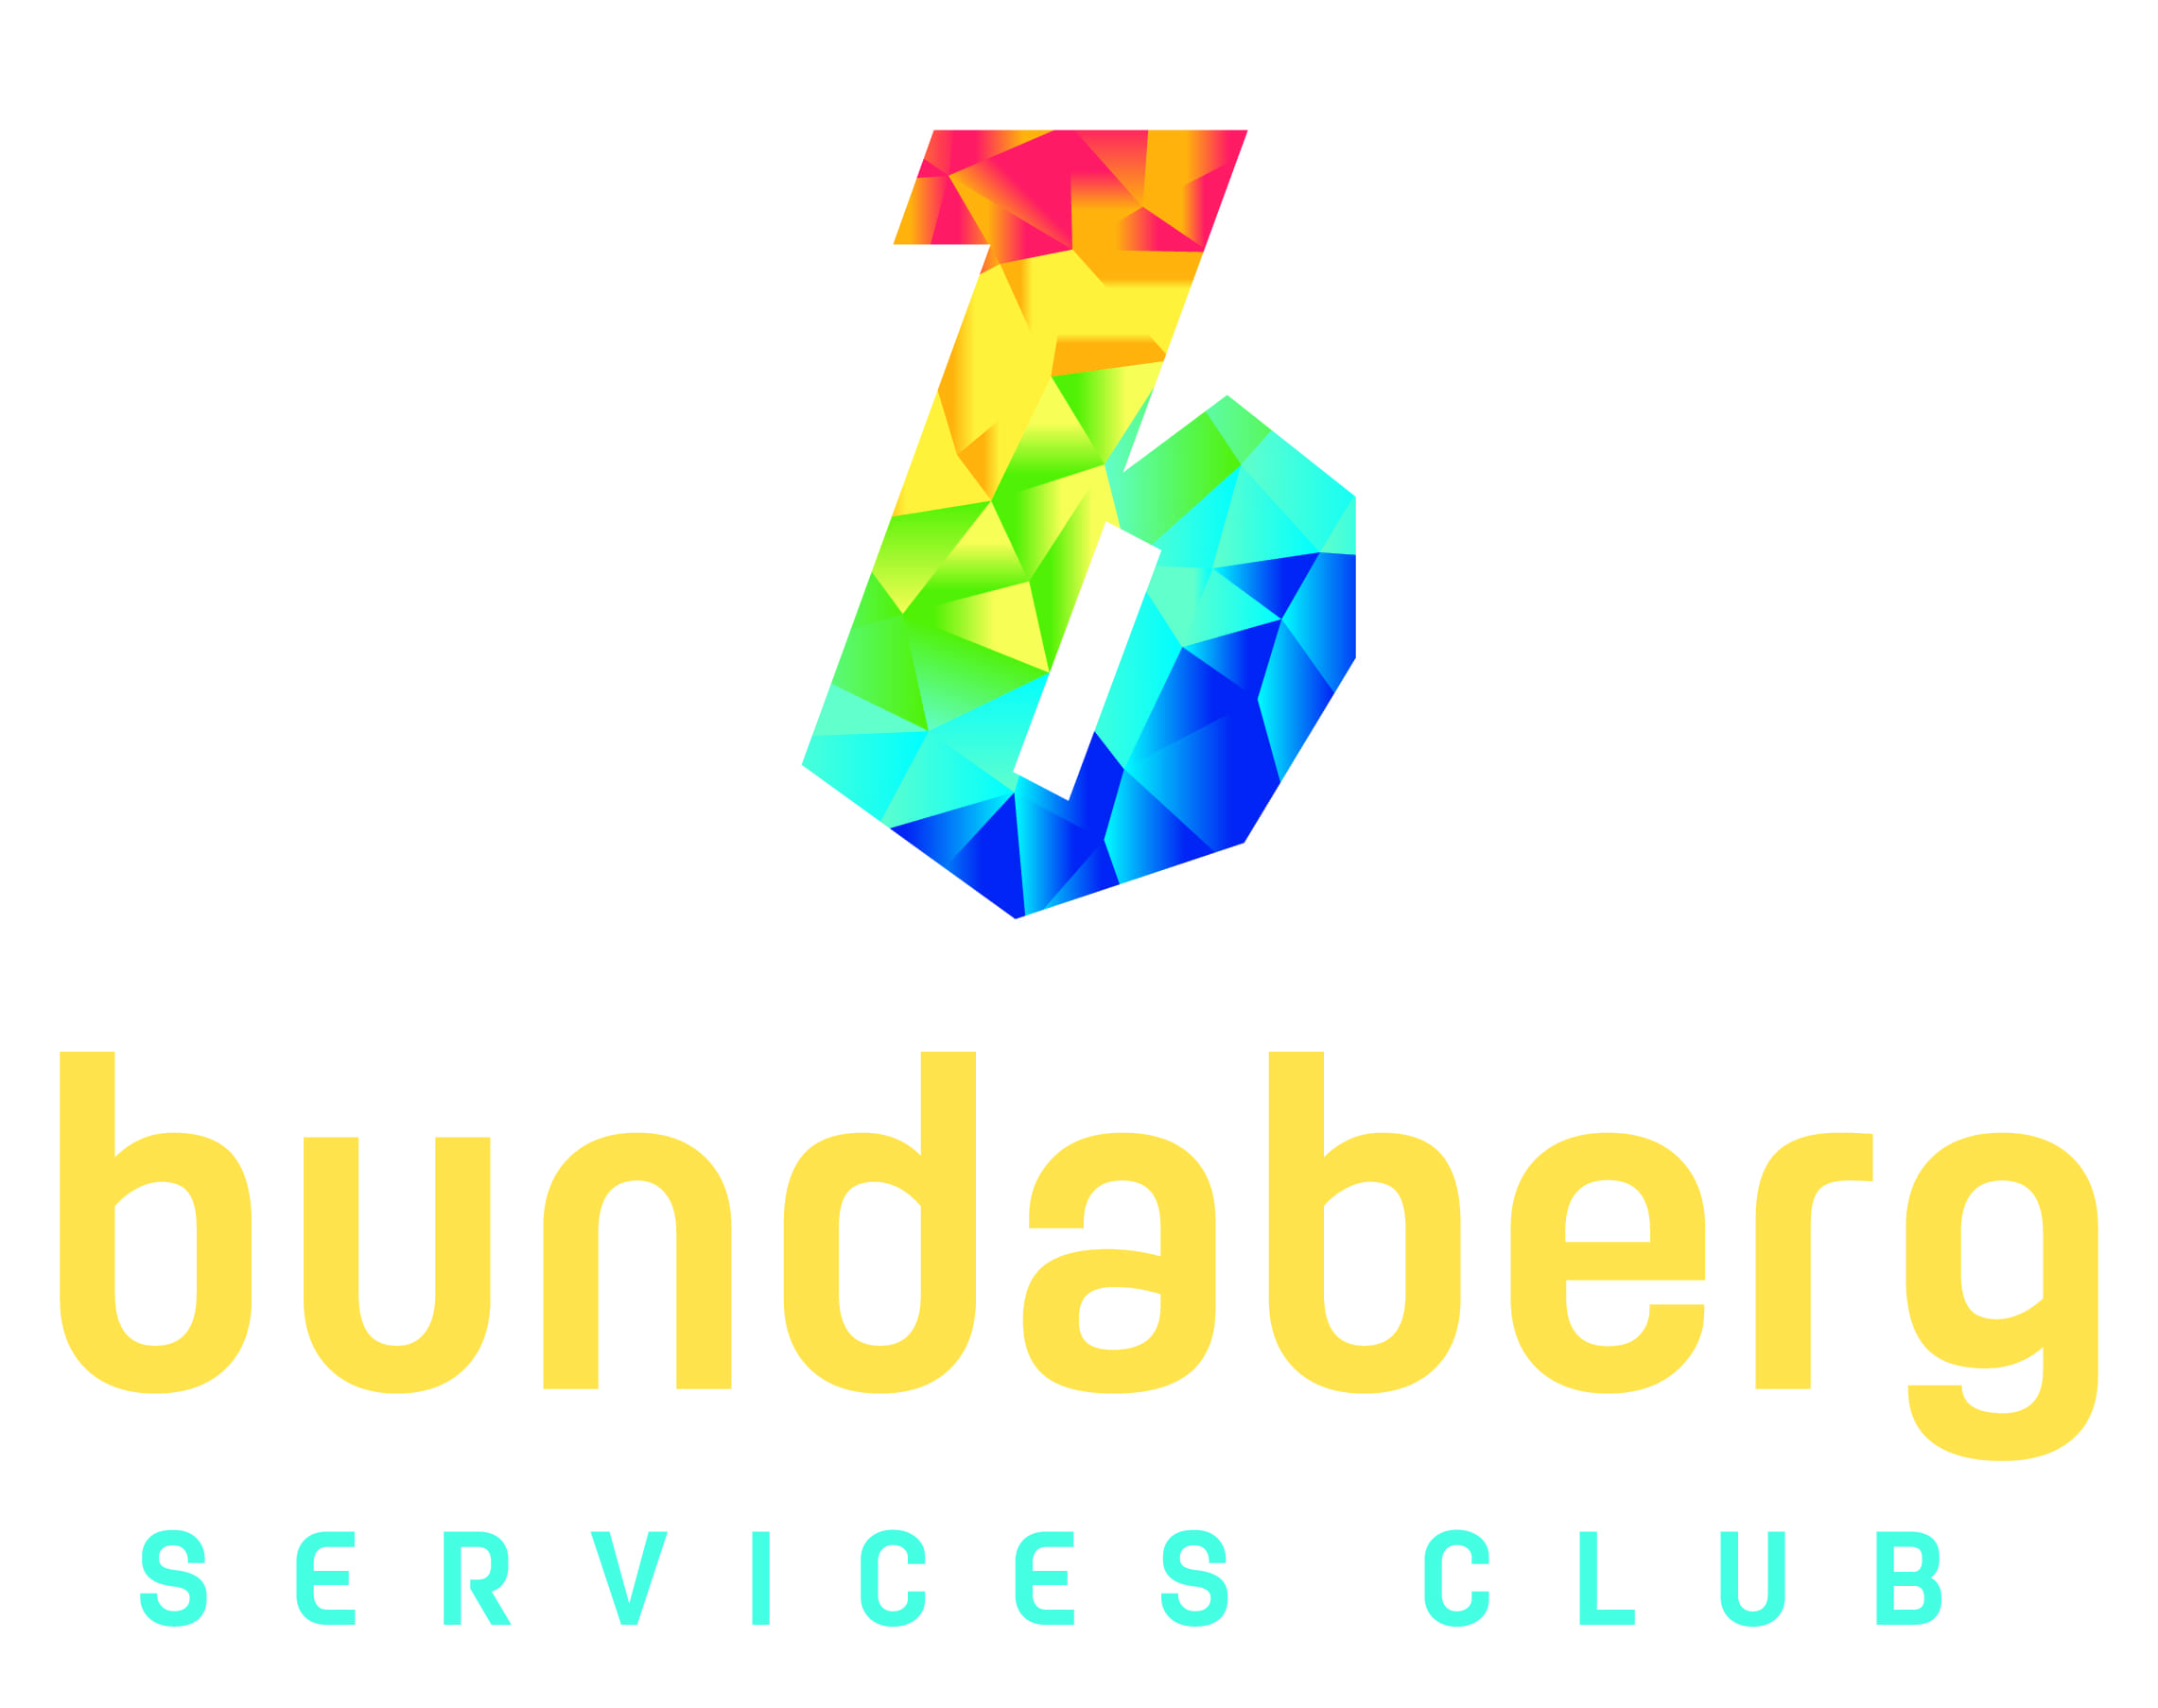 J12728 – Bundaberg Services Club Logo Suite_STACK_CMYK